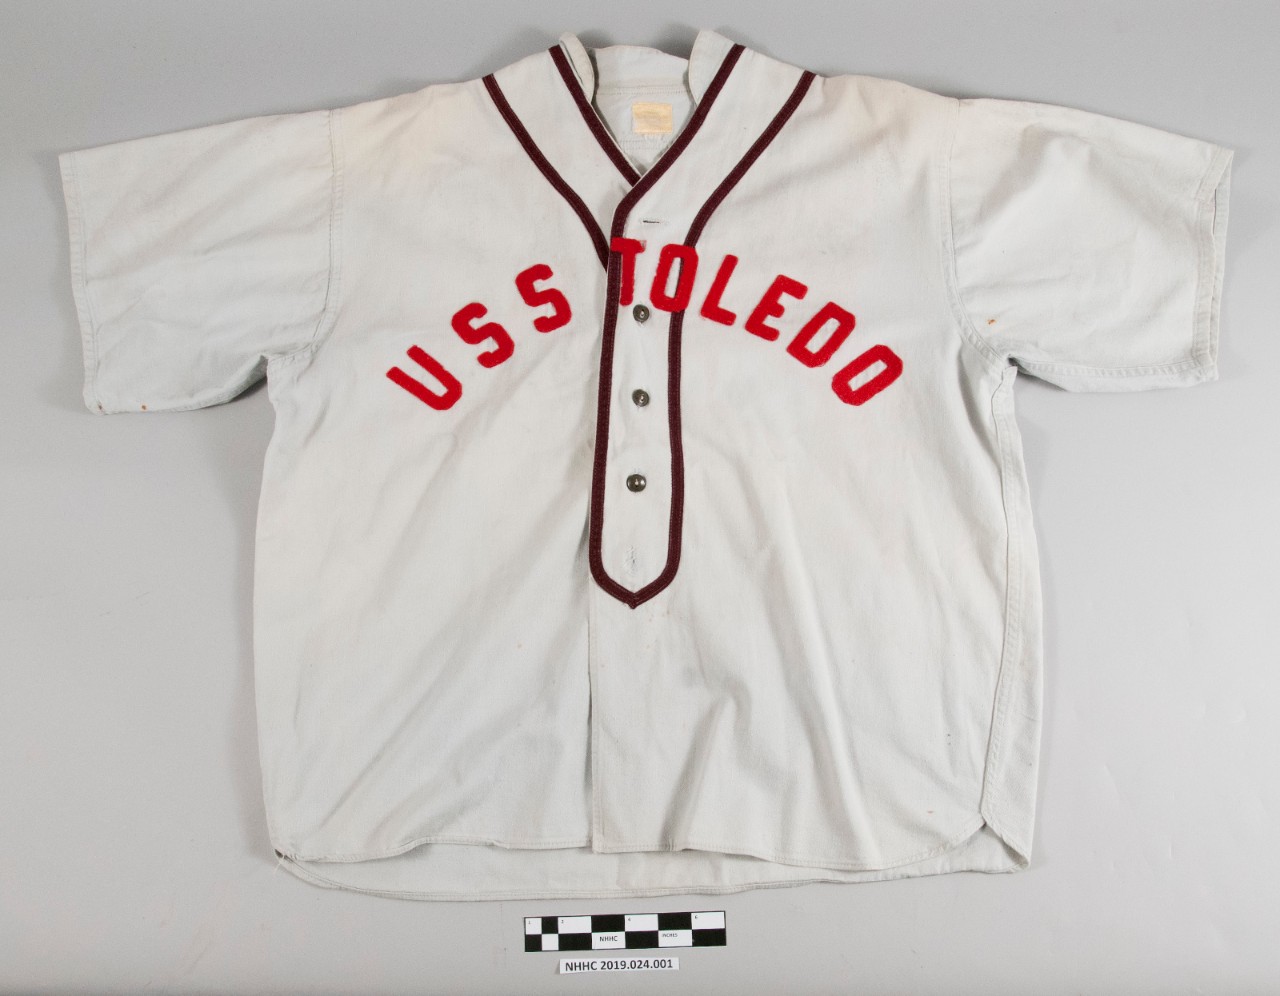 Baseball Uniform from USS Toledo (CA-133)